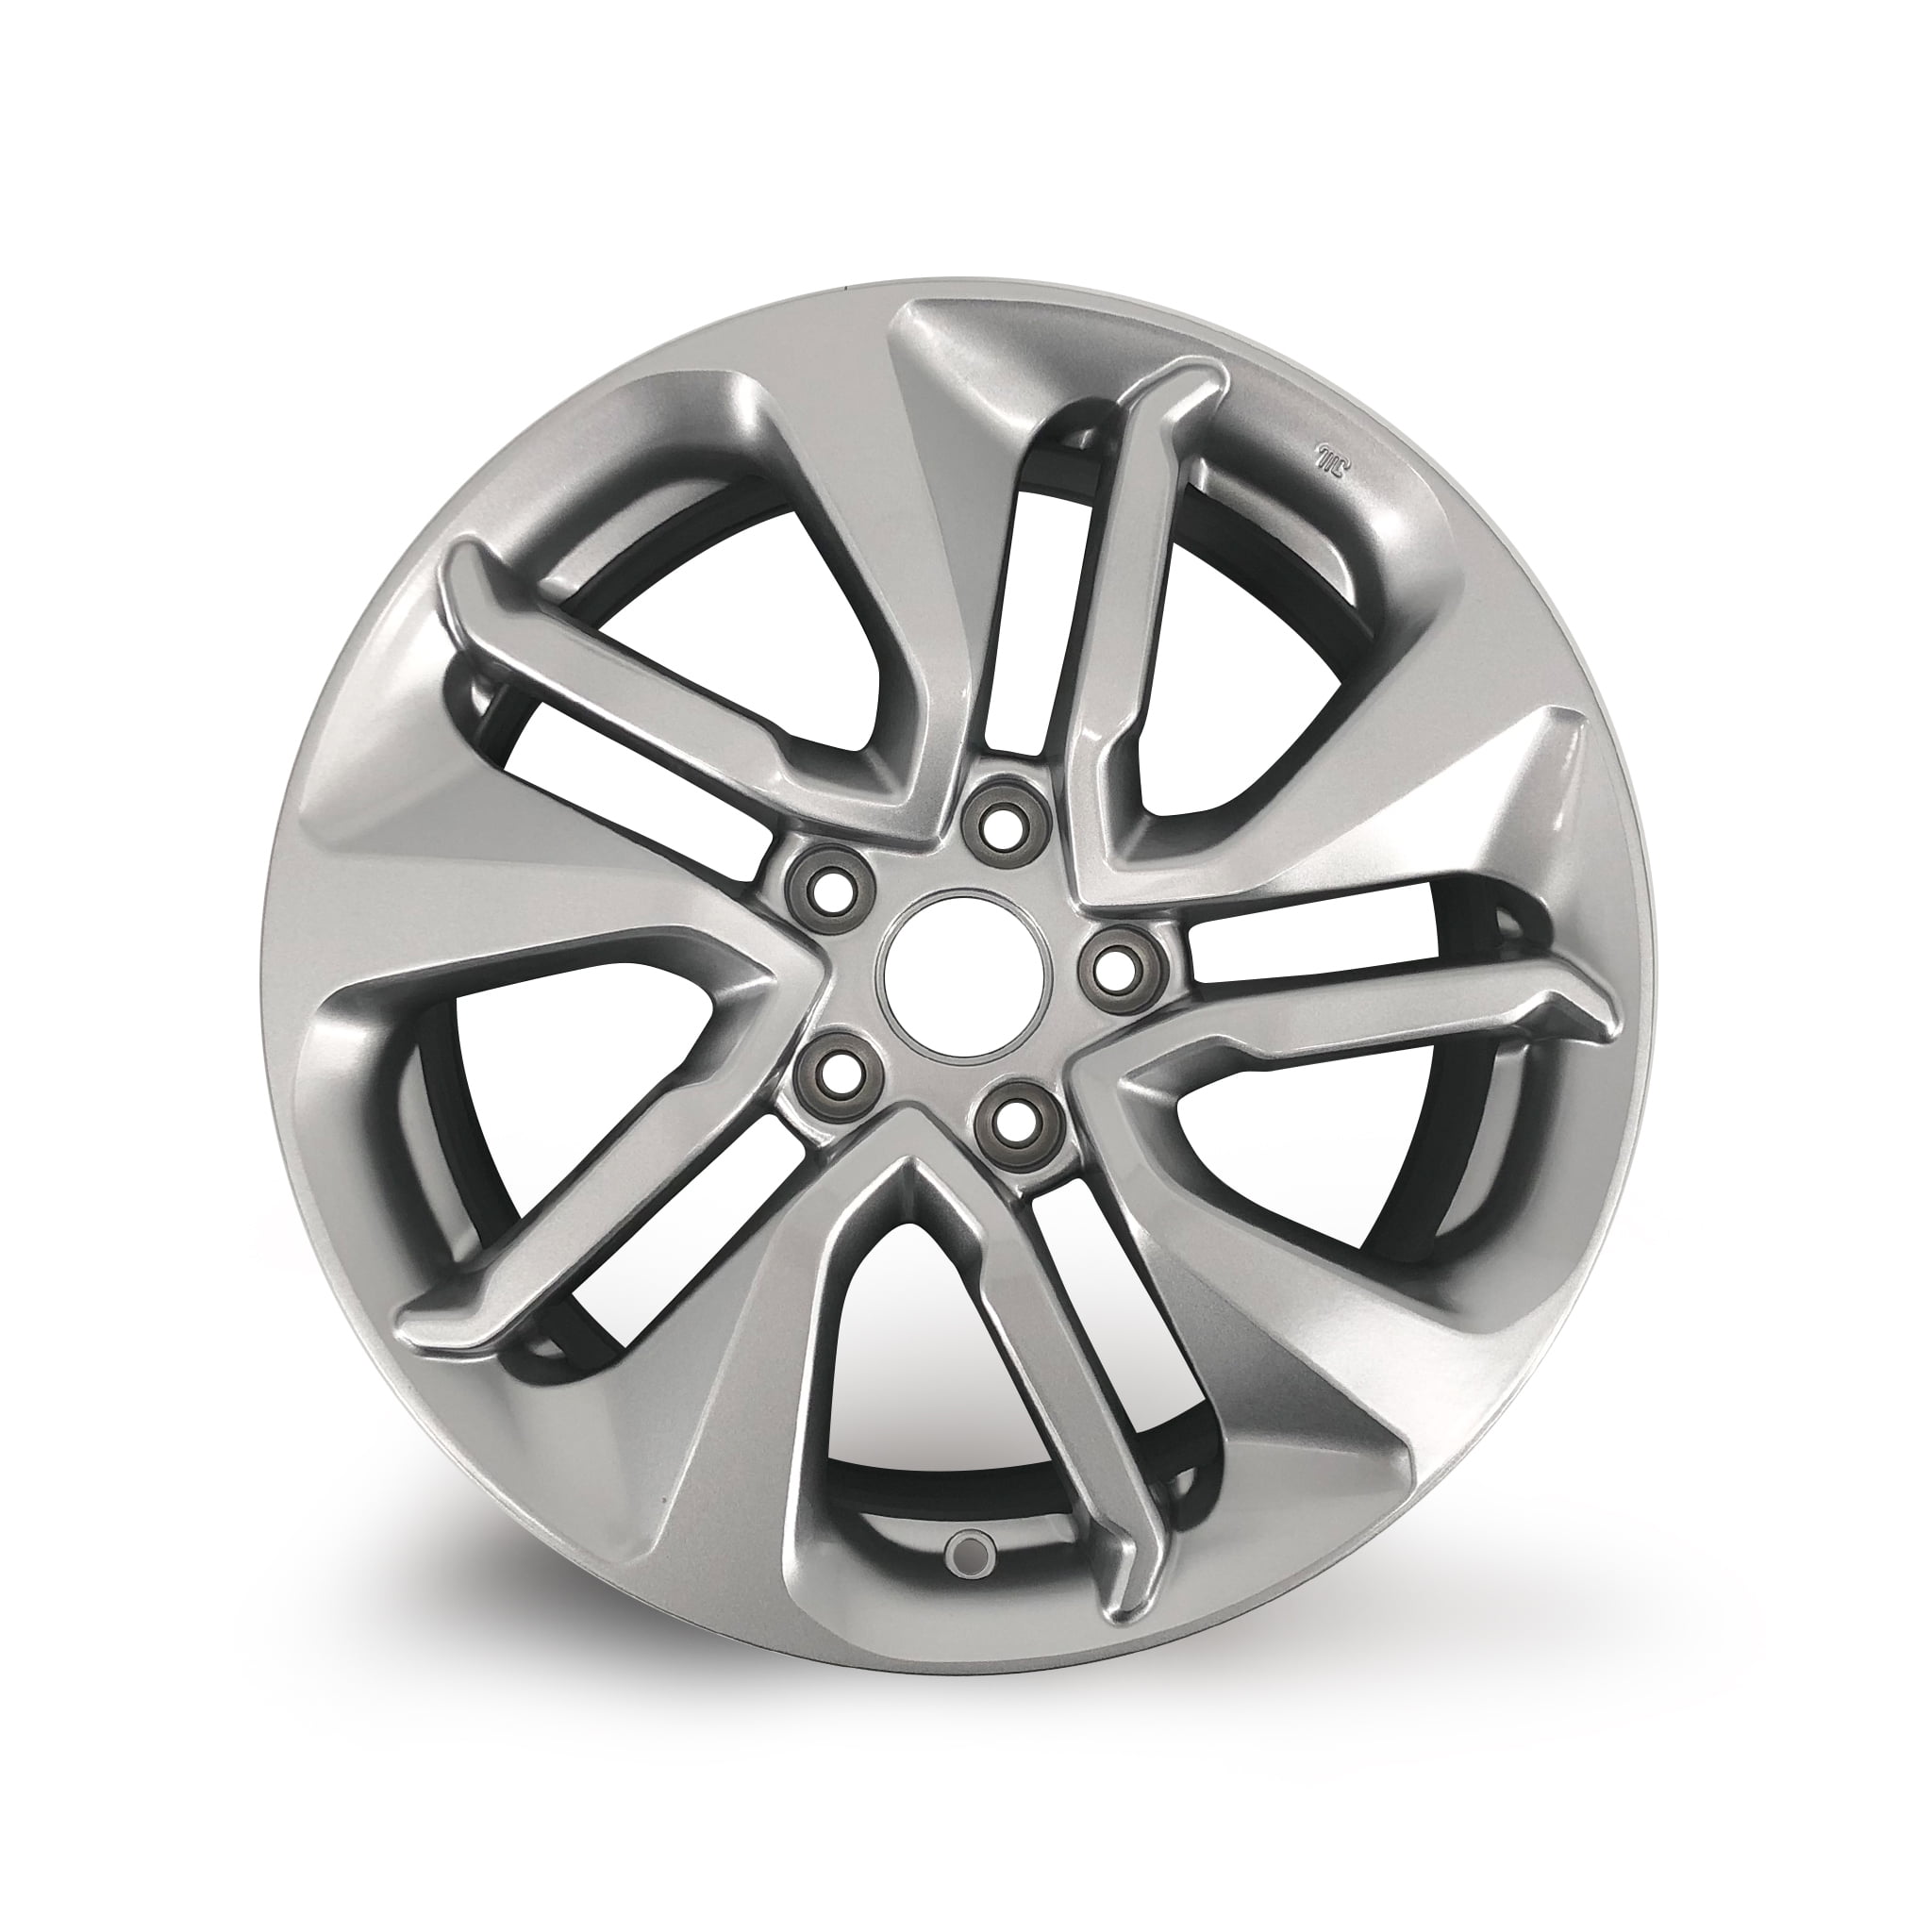 17" New Wheel For Honda Accord 2018-2021 Machined Grey OEM Replacement Rim 64124